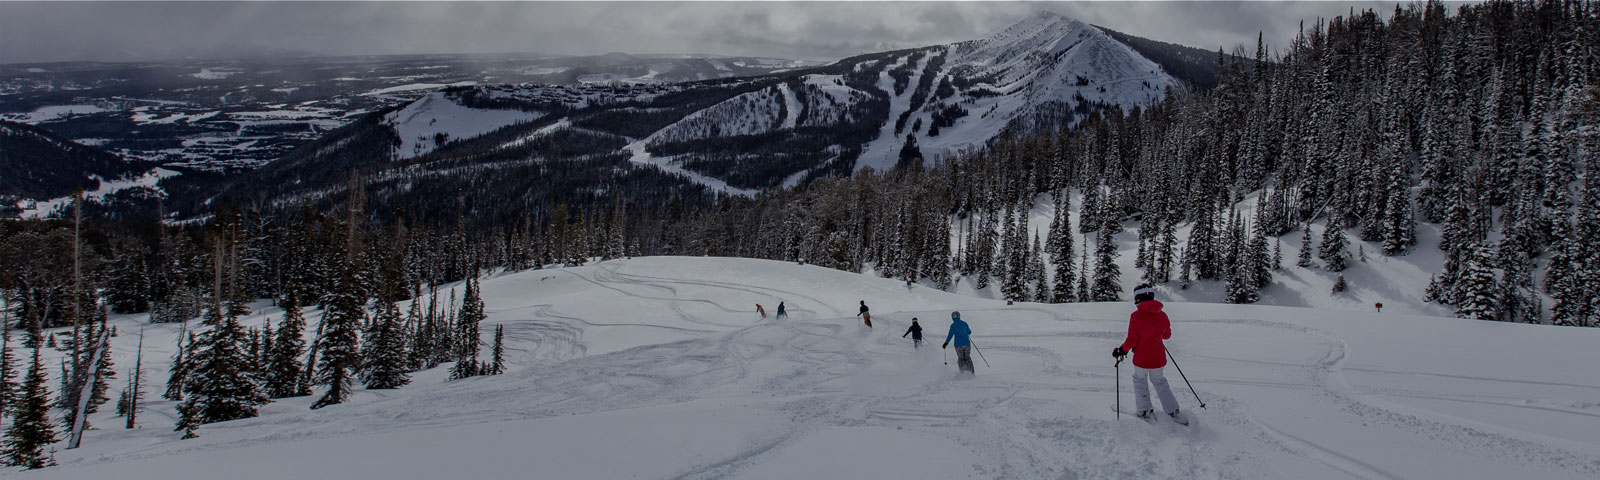 Heritage Retreats Ski Trip in Big Sky, Montana